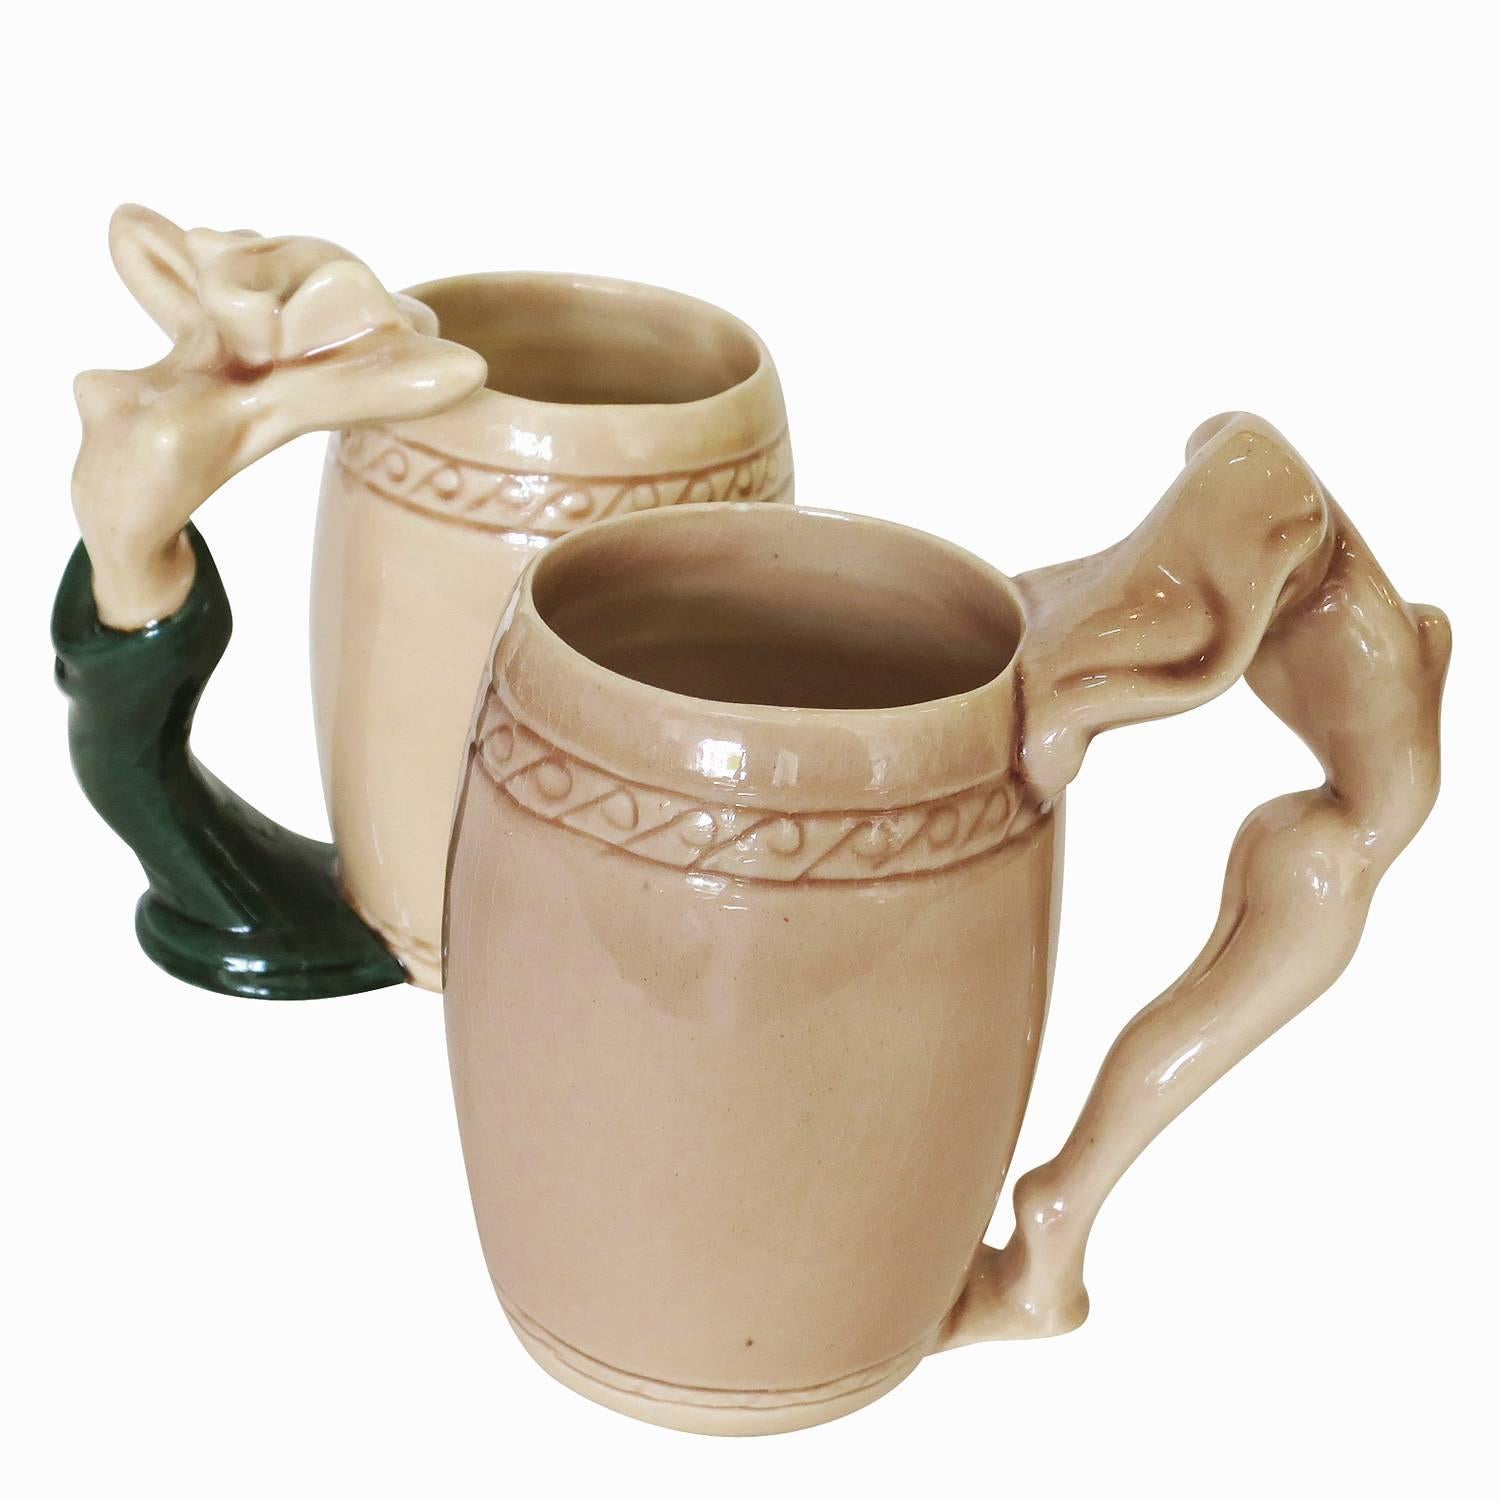 Ceramic female nude mug pair made by the Laguna Beach, California pottery artist Dorothy Kindell known as the 